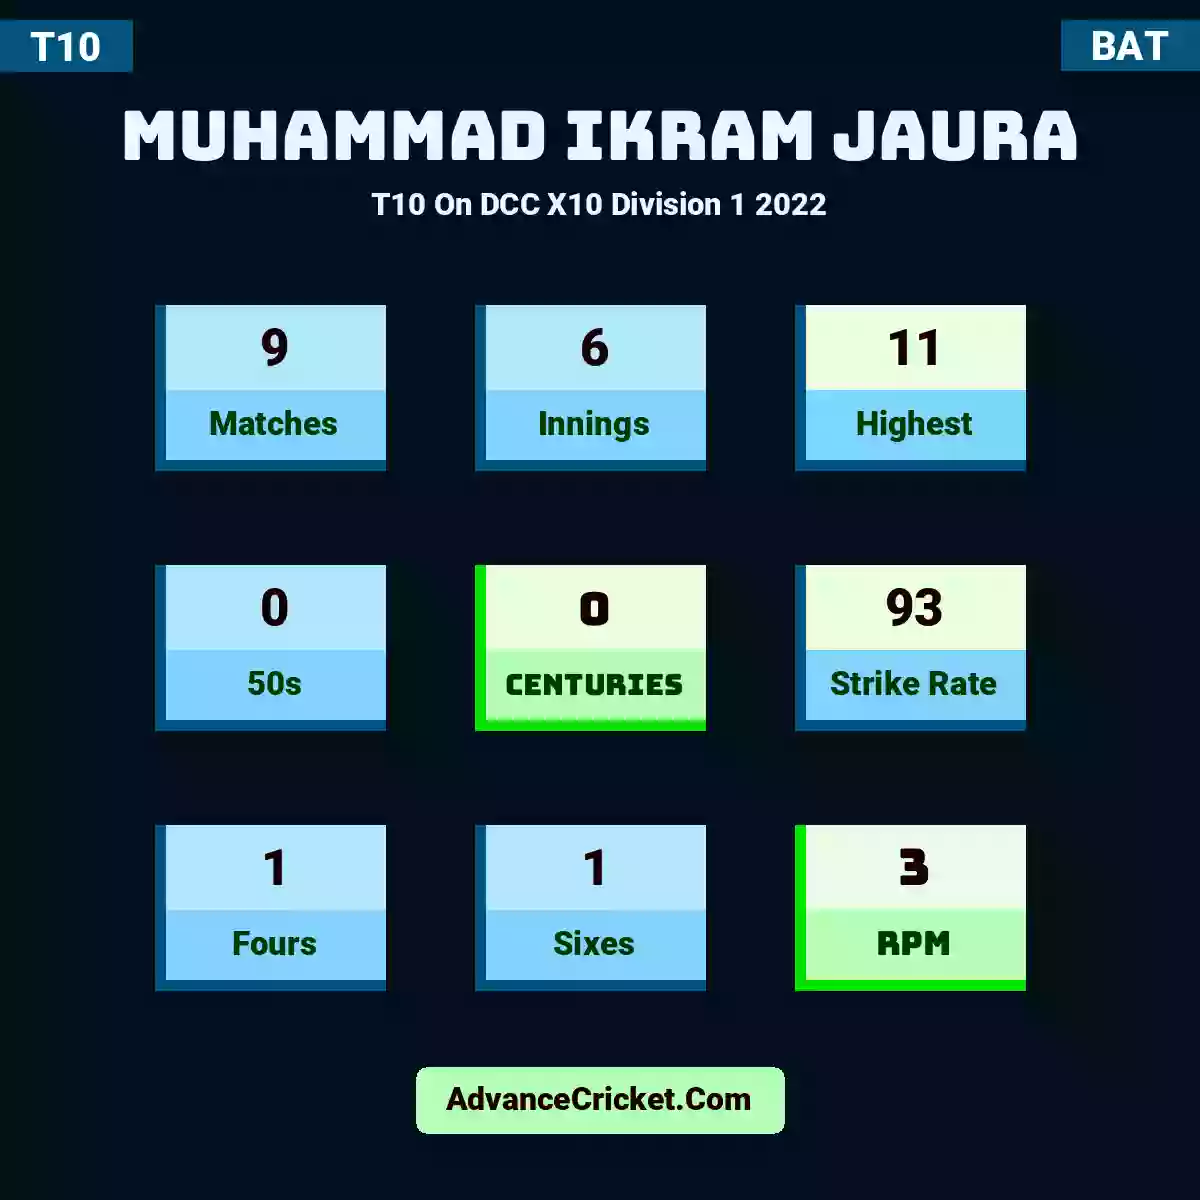 Muhammad Ikram Jaura T10  On DCC X10 Division 1 2022, Muhammad Ikram Jaura played 9 matches, scored 11 runs as highest, 0 half-centuries, and 0 centuries, with a strike rate of 93. M.Ikram.Jaura hit 1 fours and 1 sixes, with an RPM of 3.